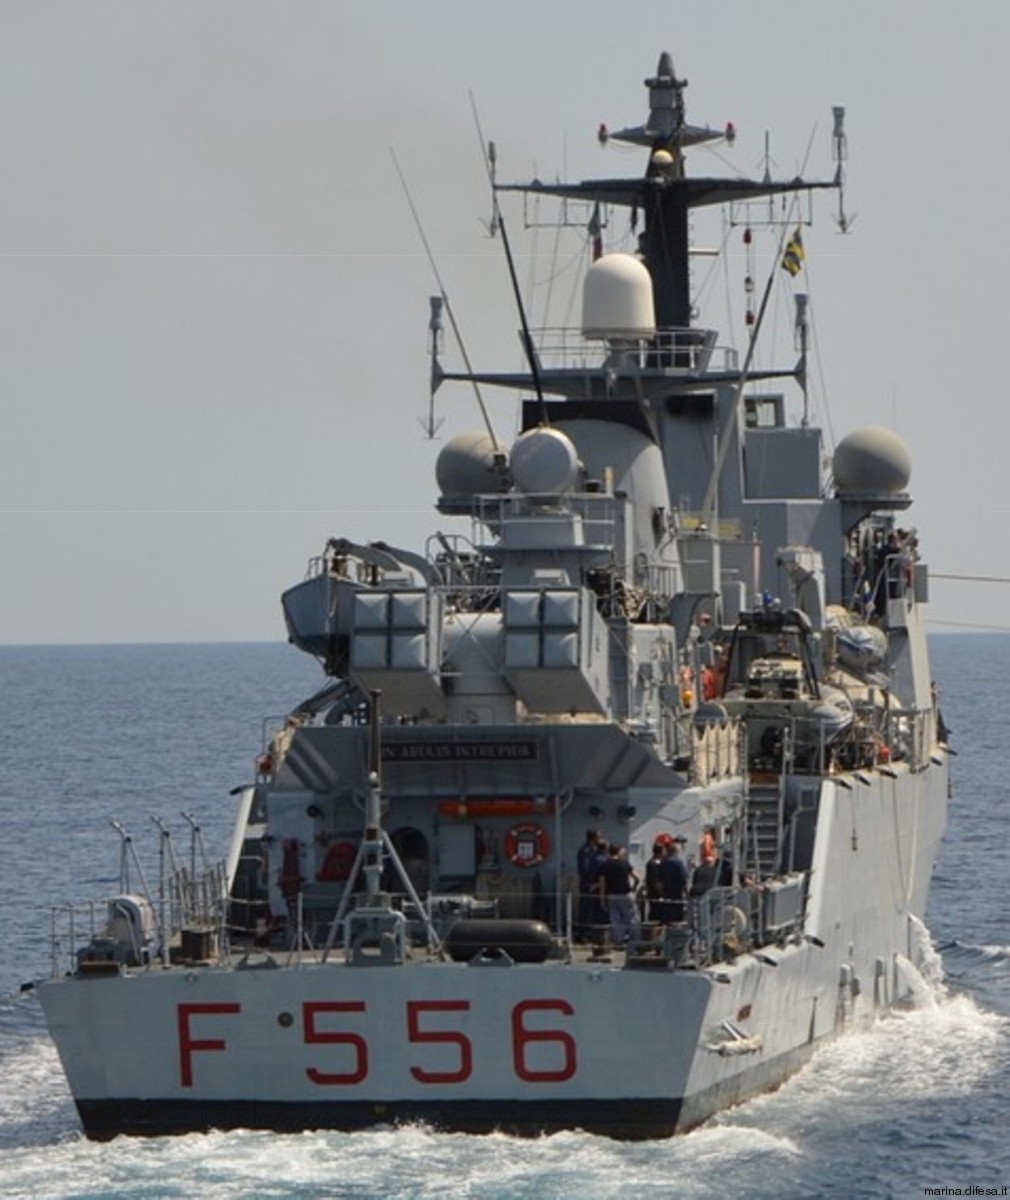 f-556 chimera nave its minerva class corvette italian navy marina militare 08